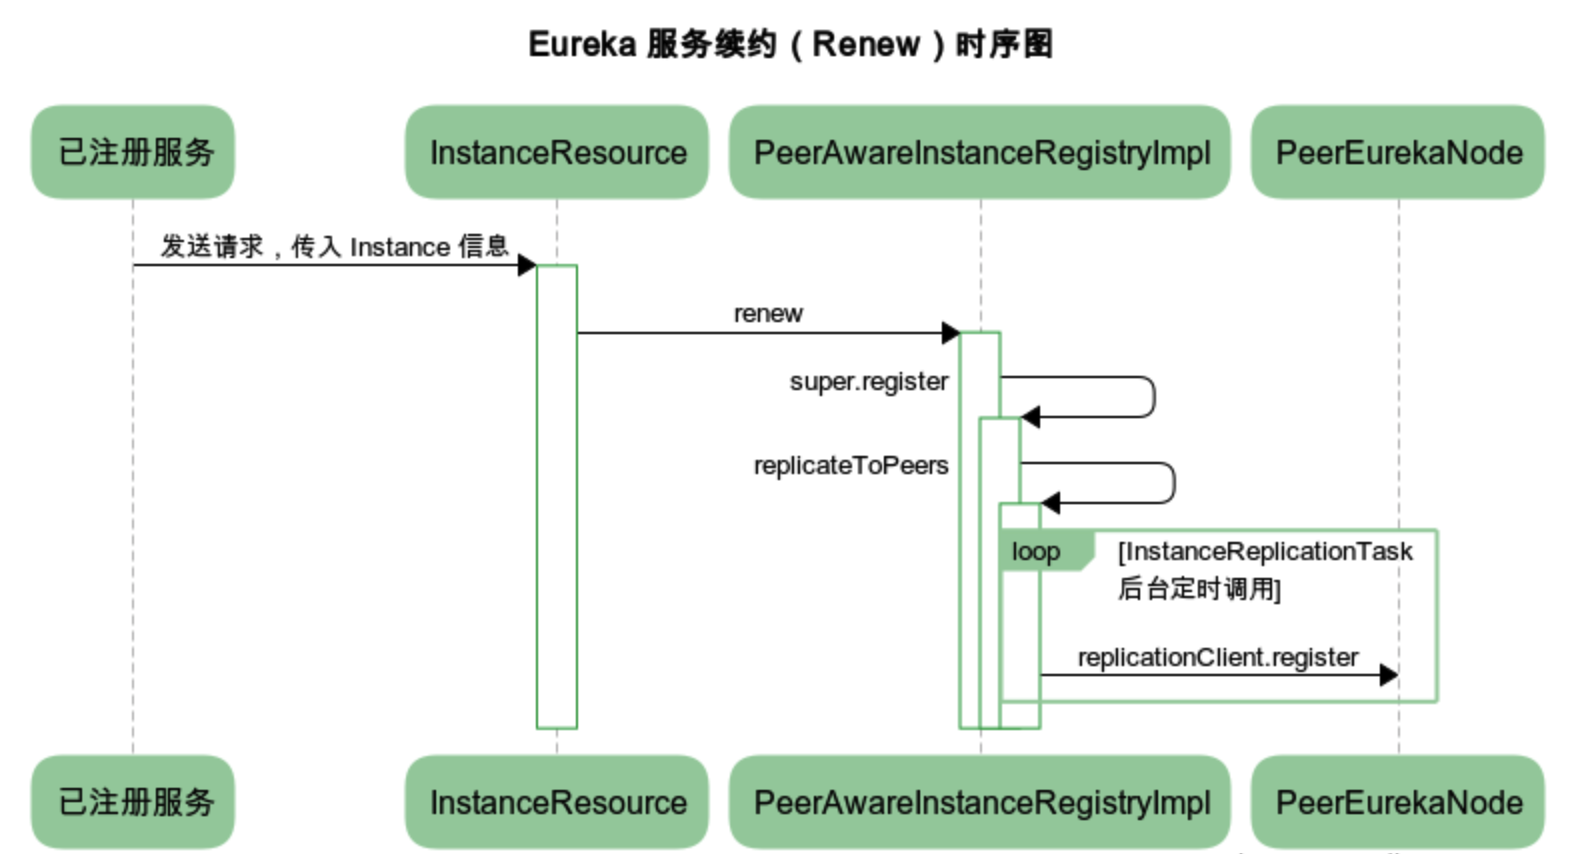 eureka-server-renew-sequence-chart.png